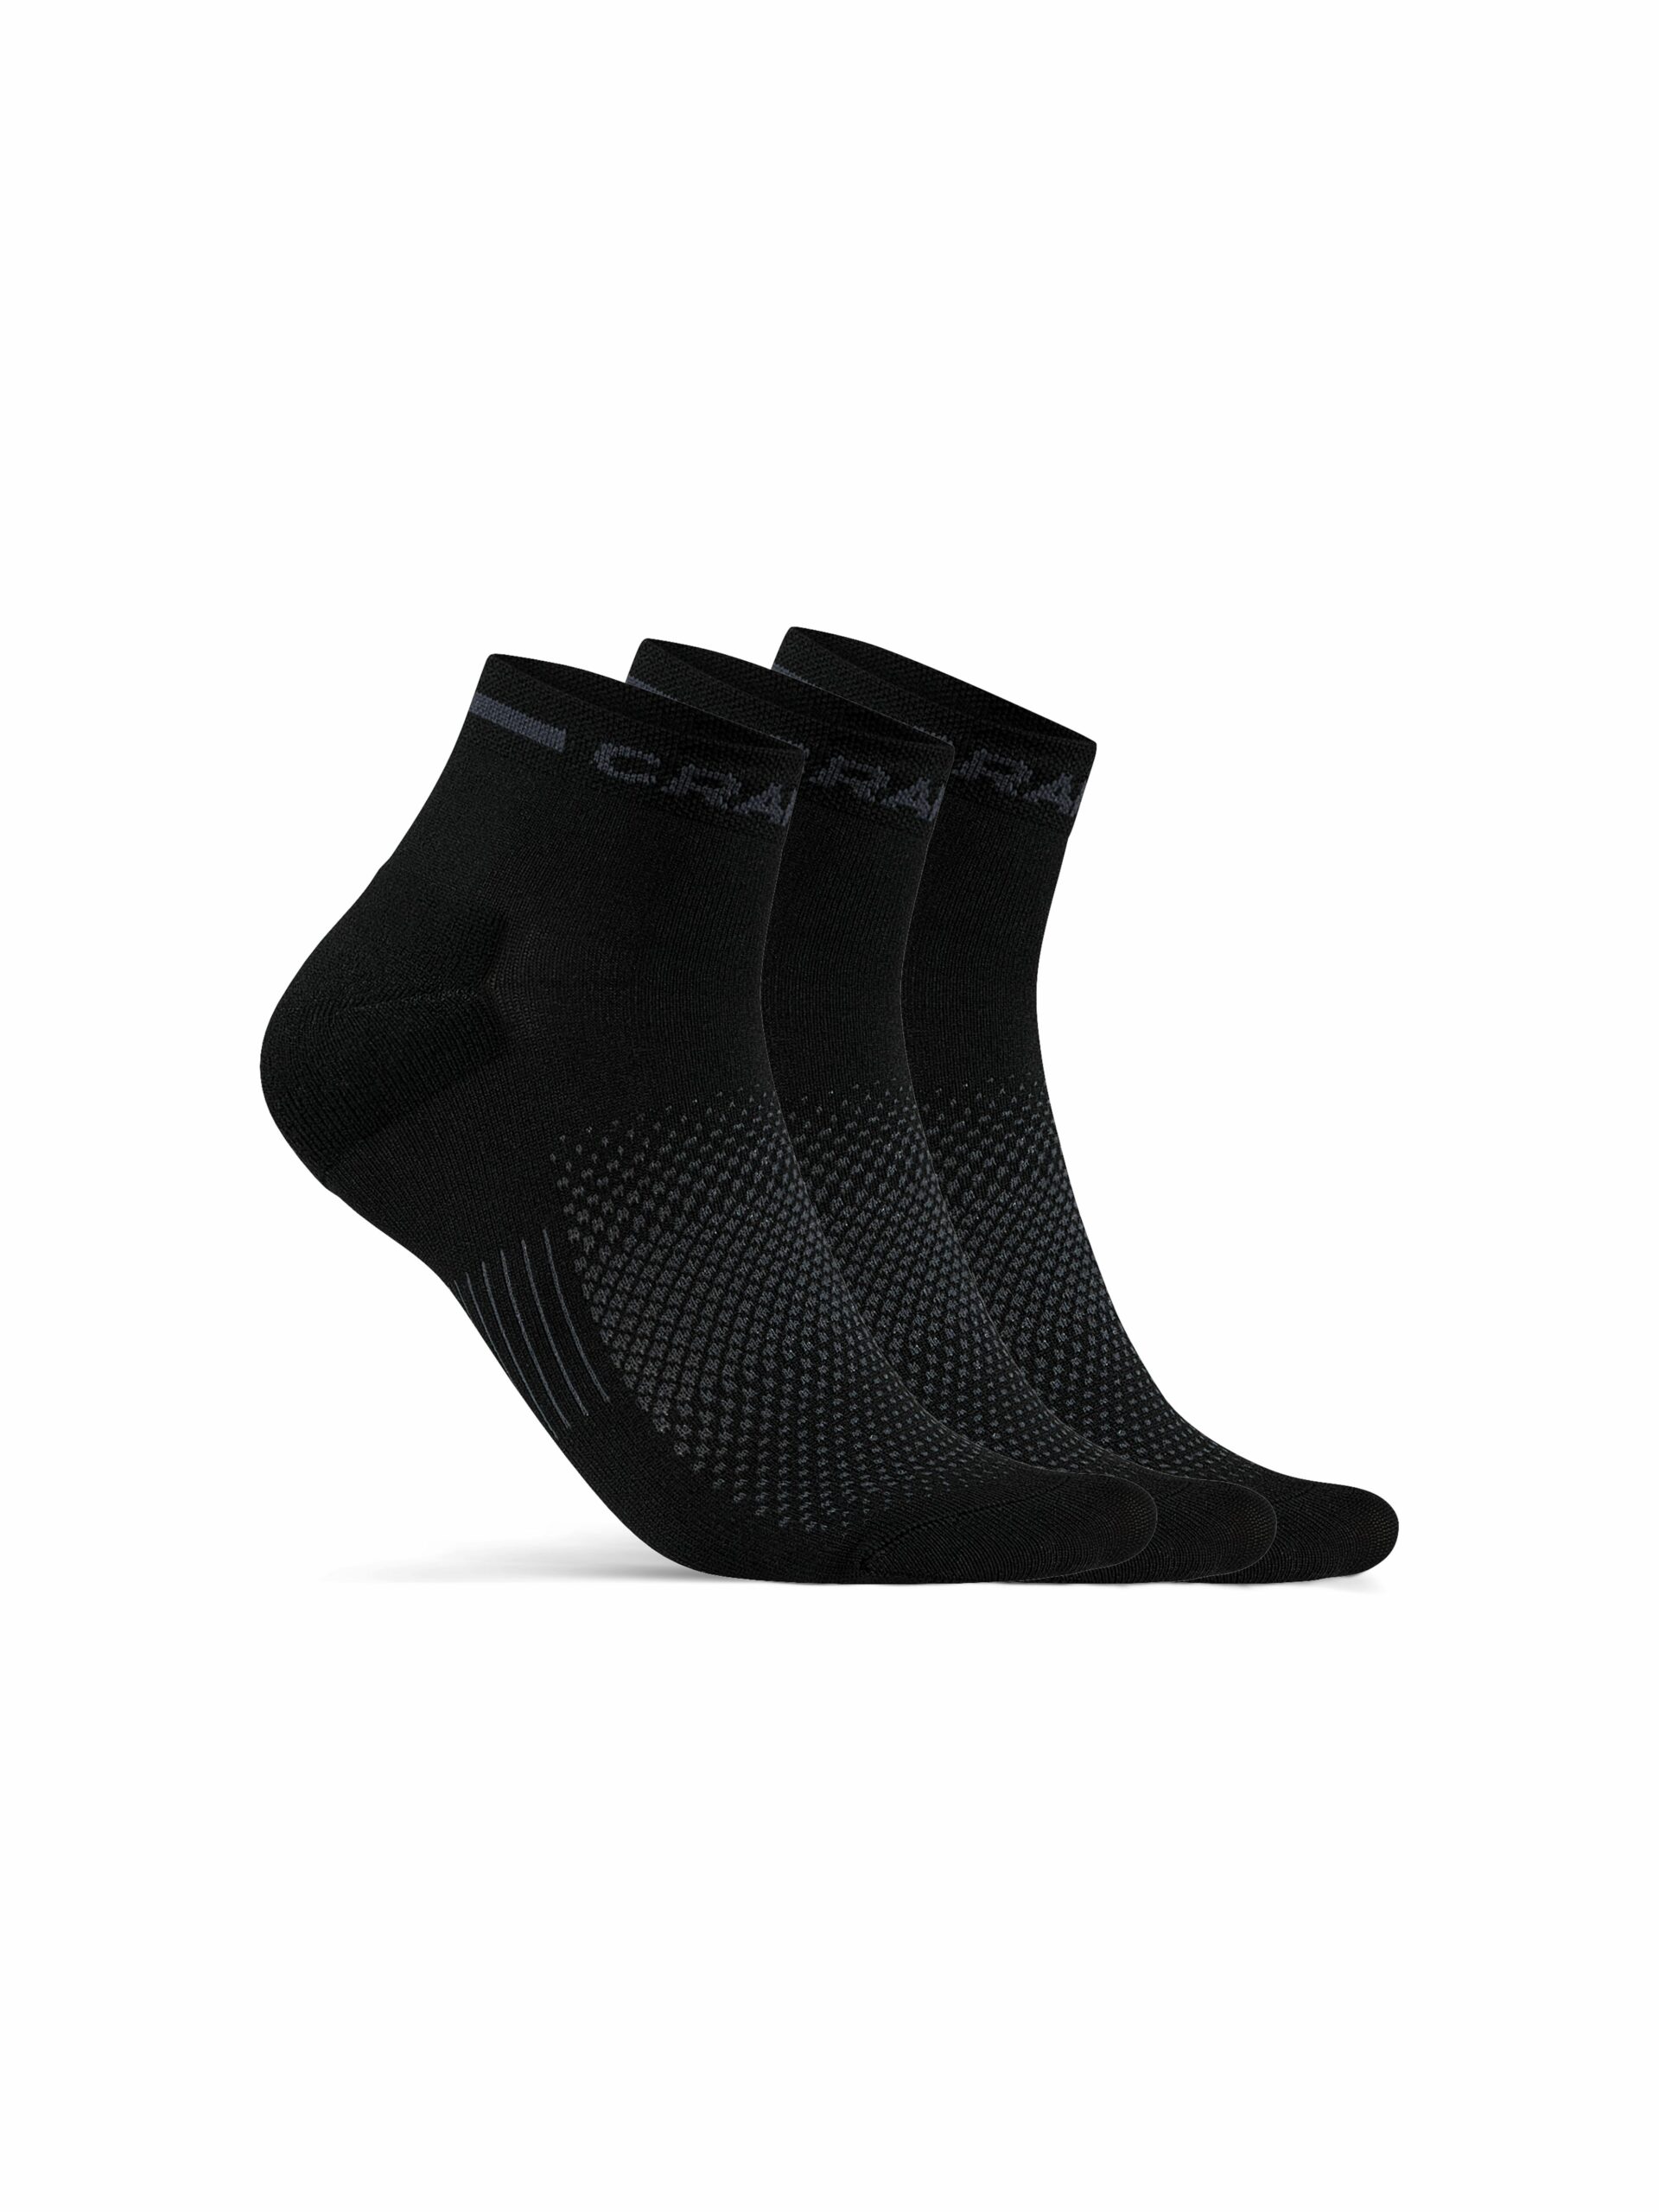 Craft - CORE Dry Mid Sock 3-Pack - Black 46/48